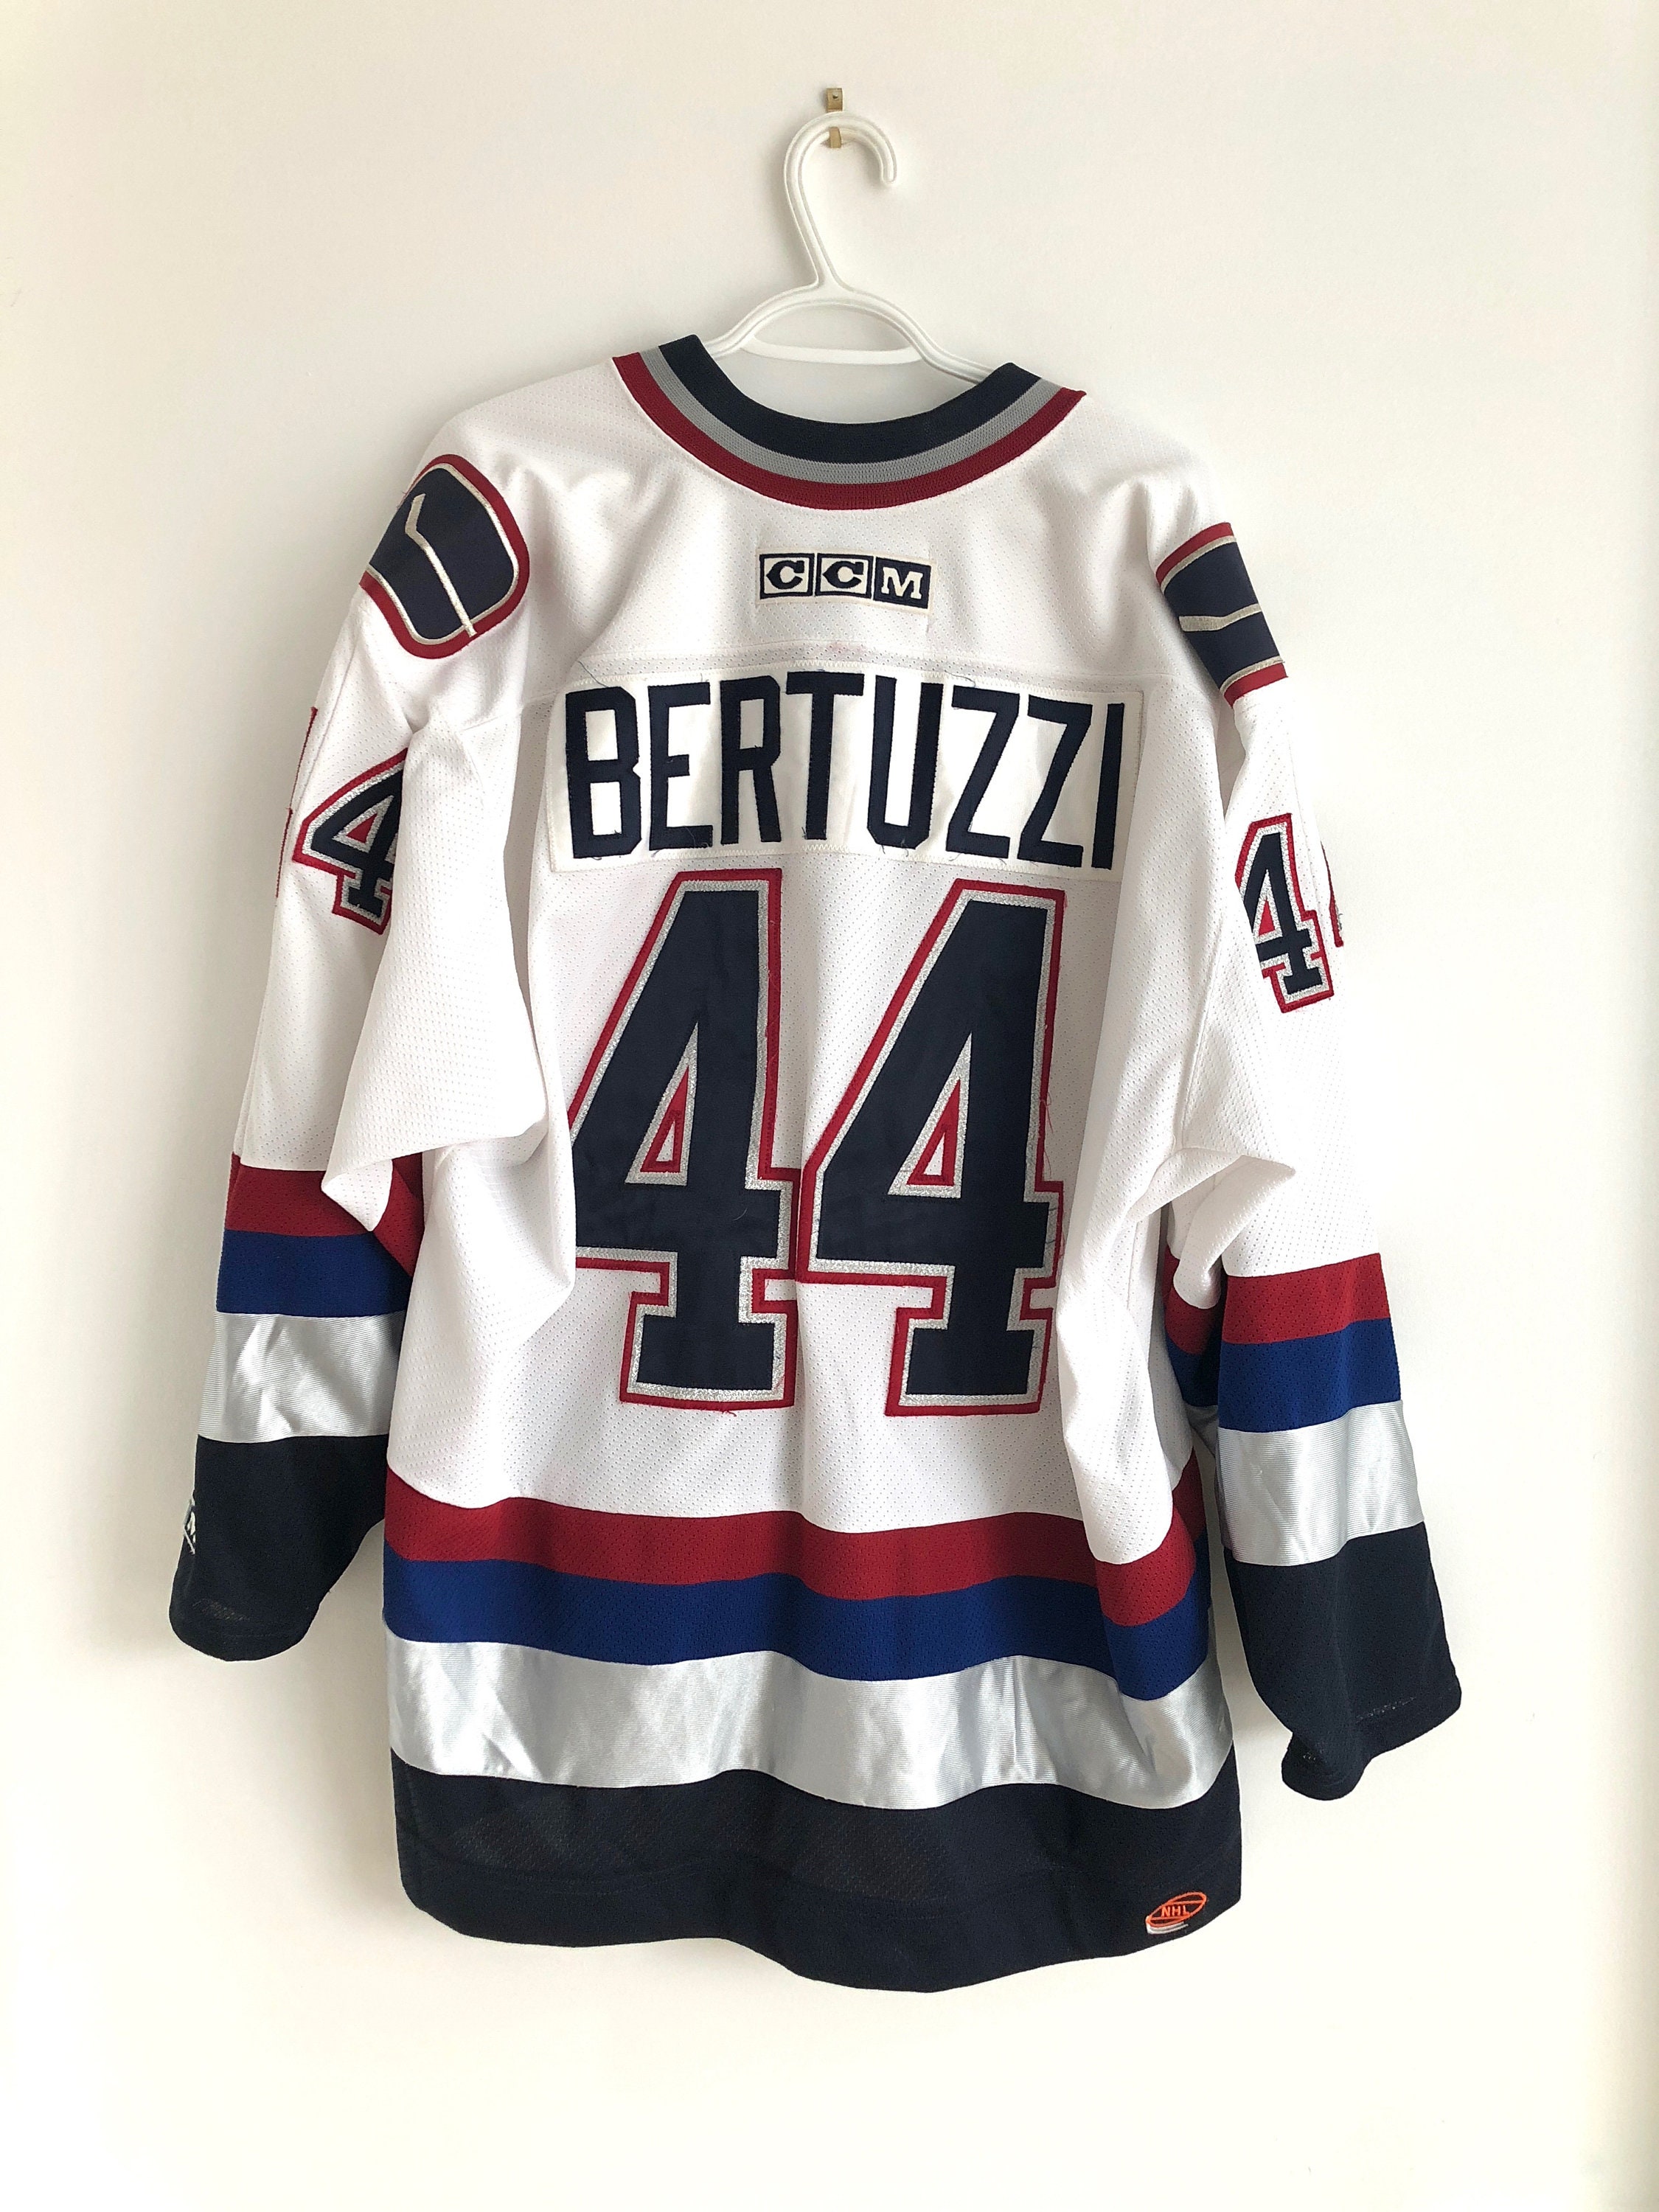 Todd Bertuzzi Canucks jersey